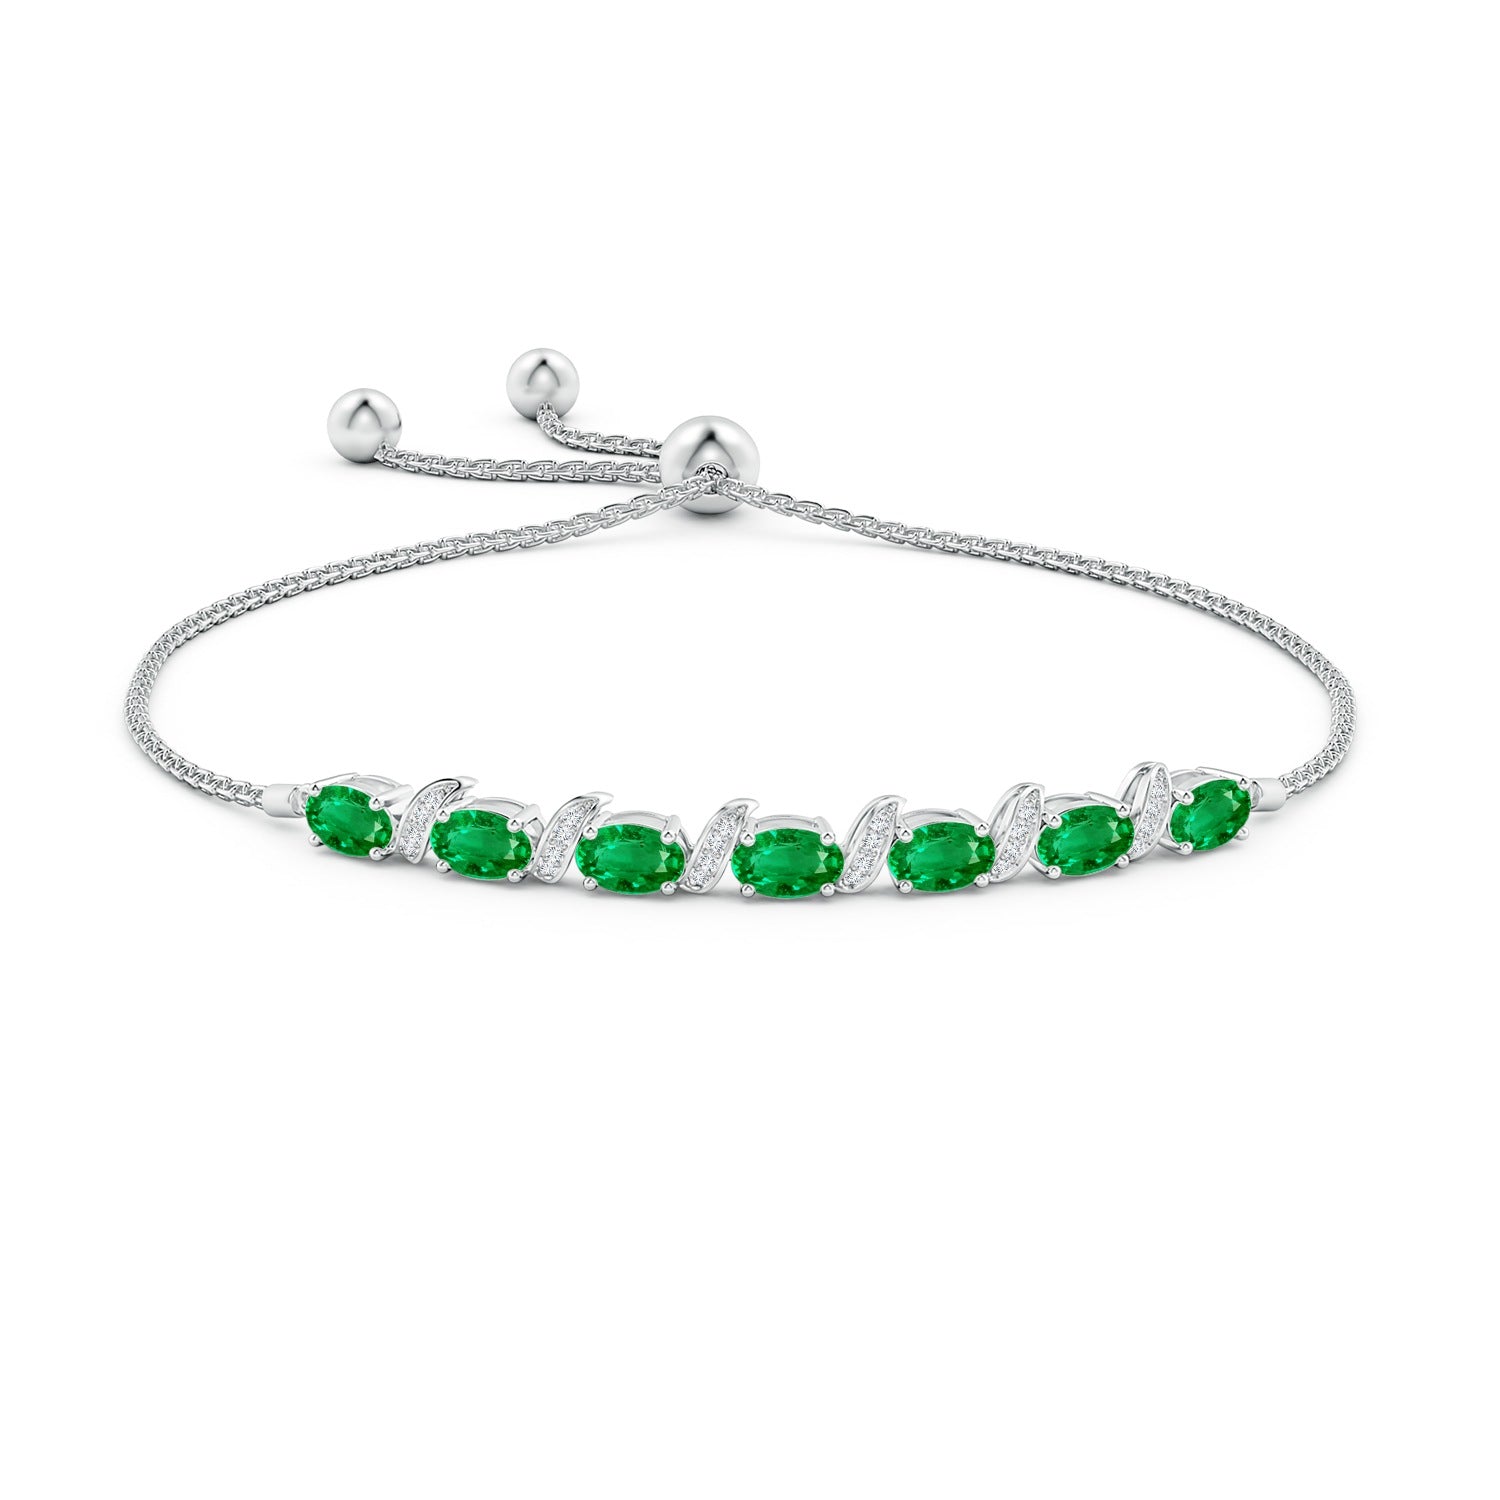 2.92 CT. Oval Emerald Bolo Bracelet with Pavé-Set White Sapphire